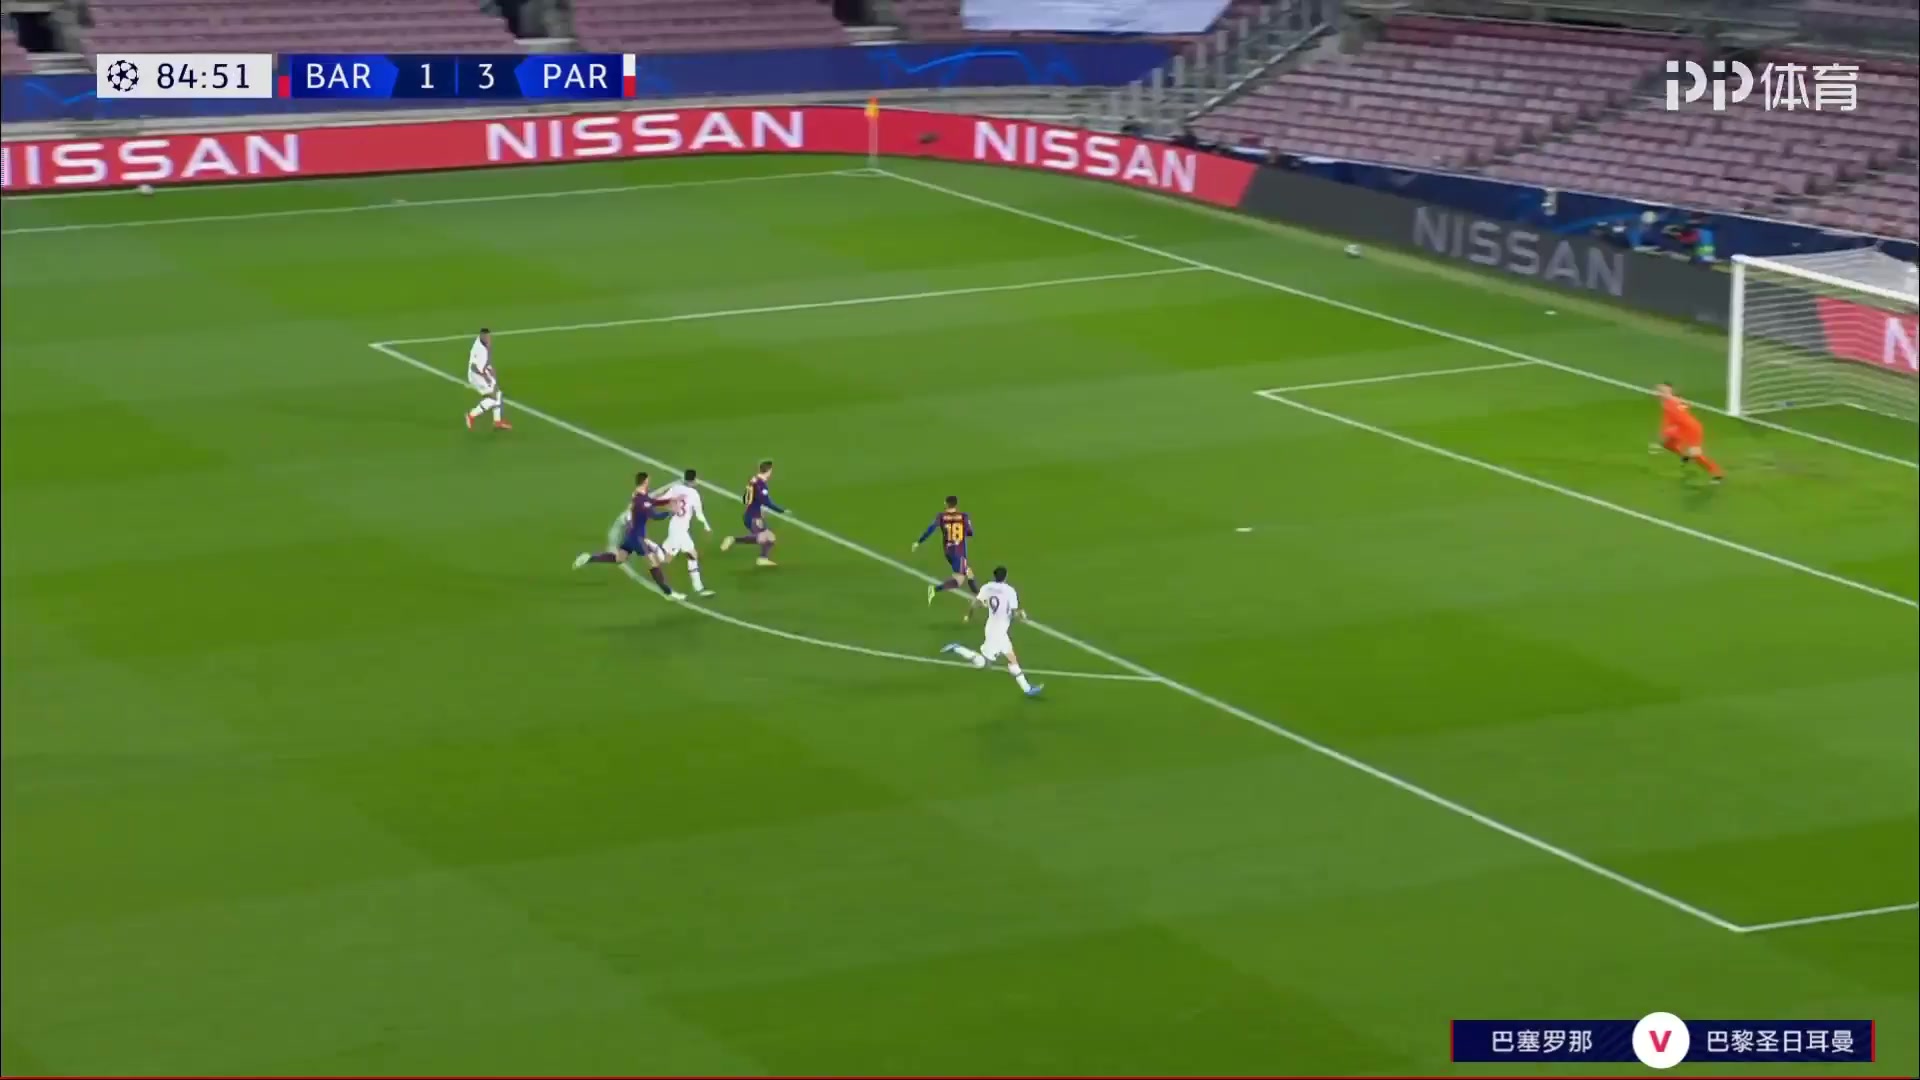 UEFA CL FC Barcelona Vs Paris Saint Germain (PSG) Kylian Mbappe Lottin Goal in 86 min, Score 1:4